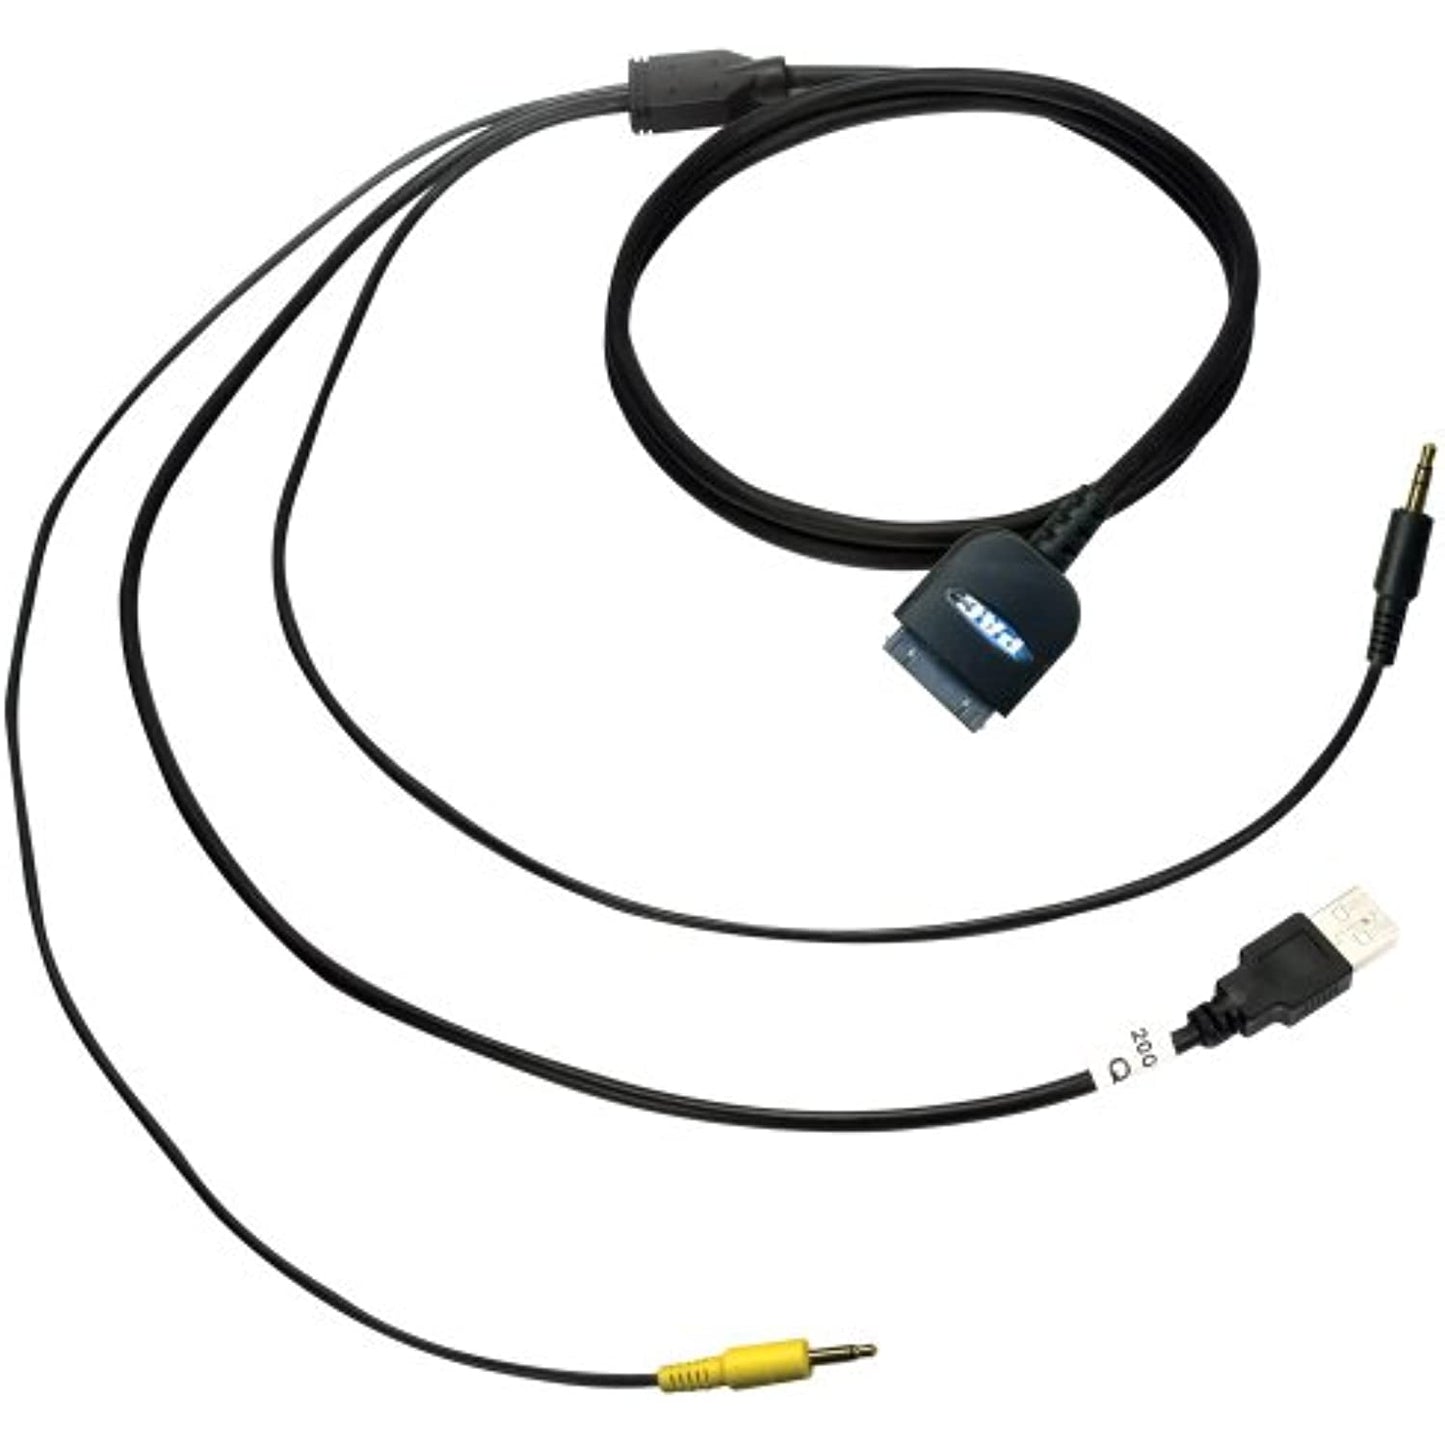 PAC IC-KENUSBAV2 Kenwood USB Audio/Video to iPod/iPhone Cable